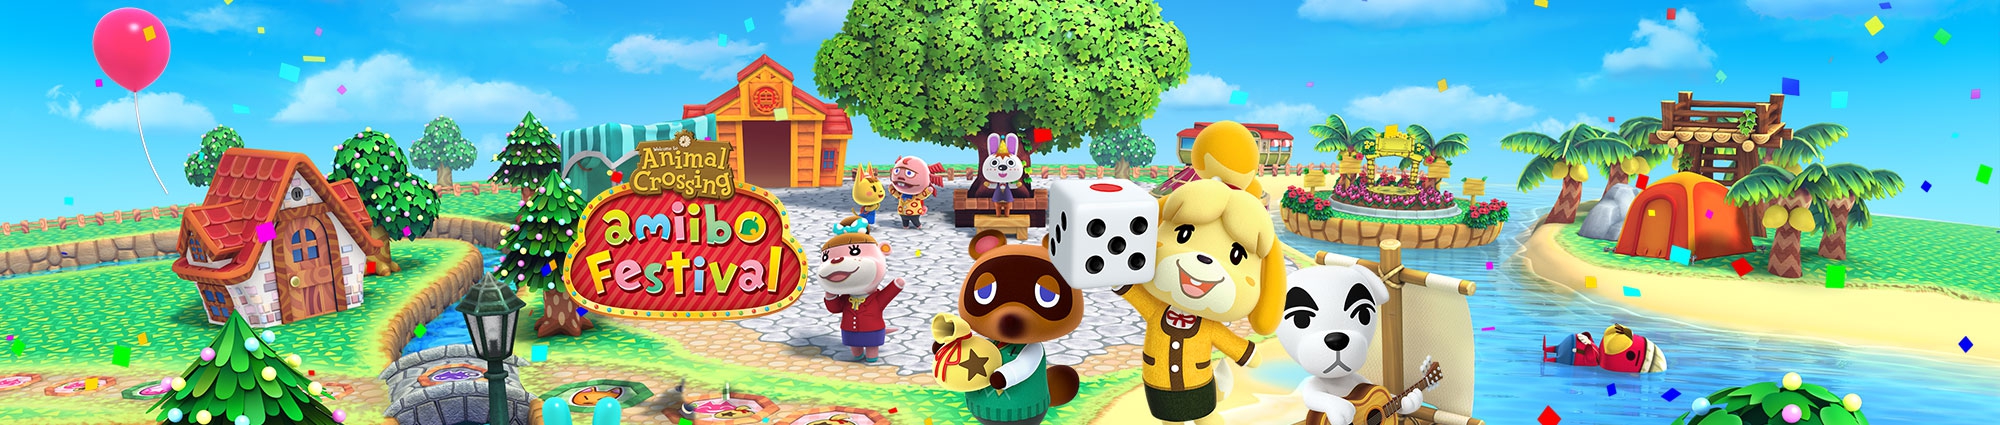 Banner Animal Crossing amiibo Festival